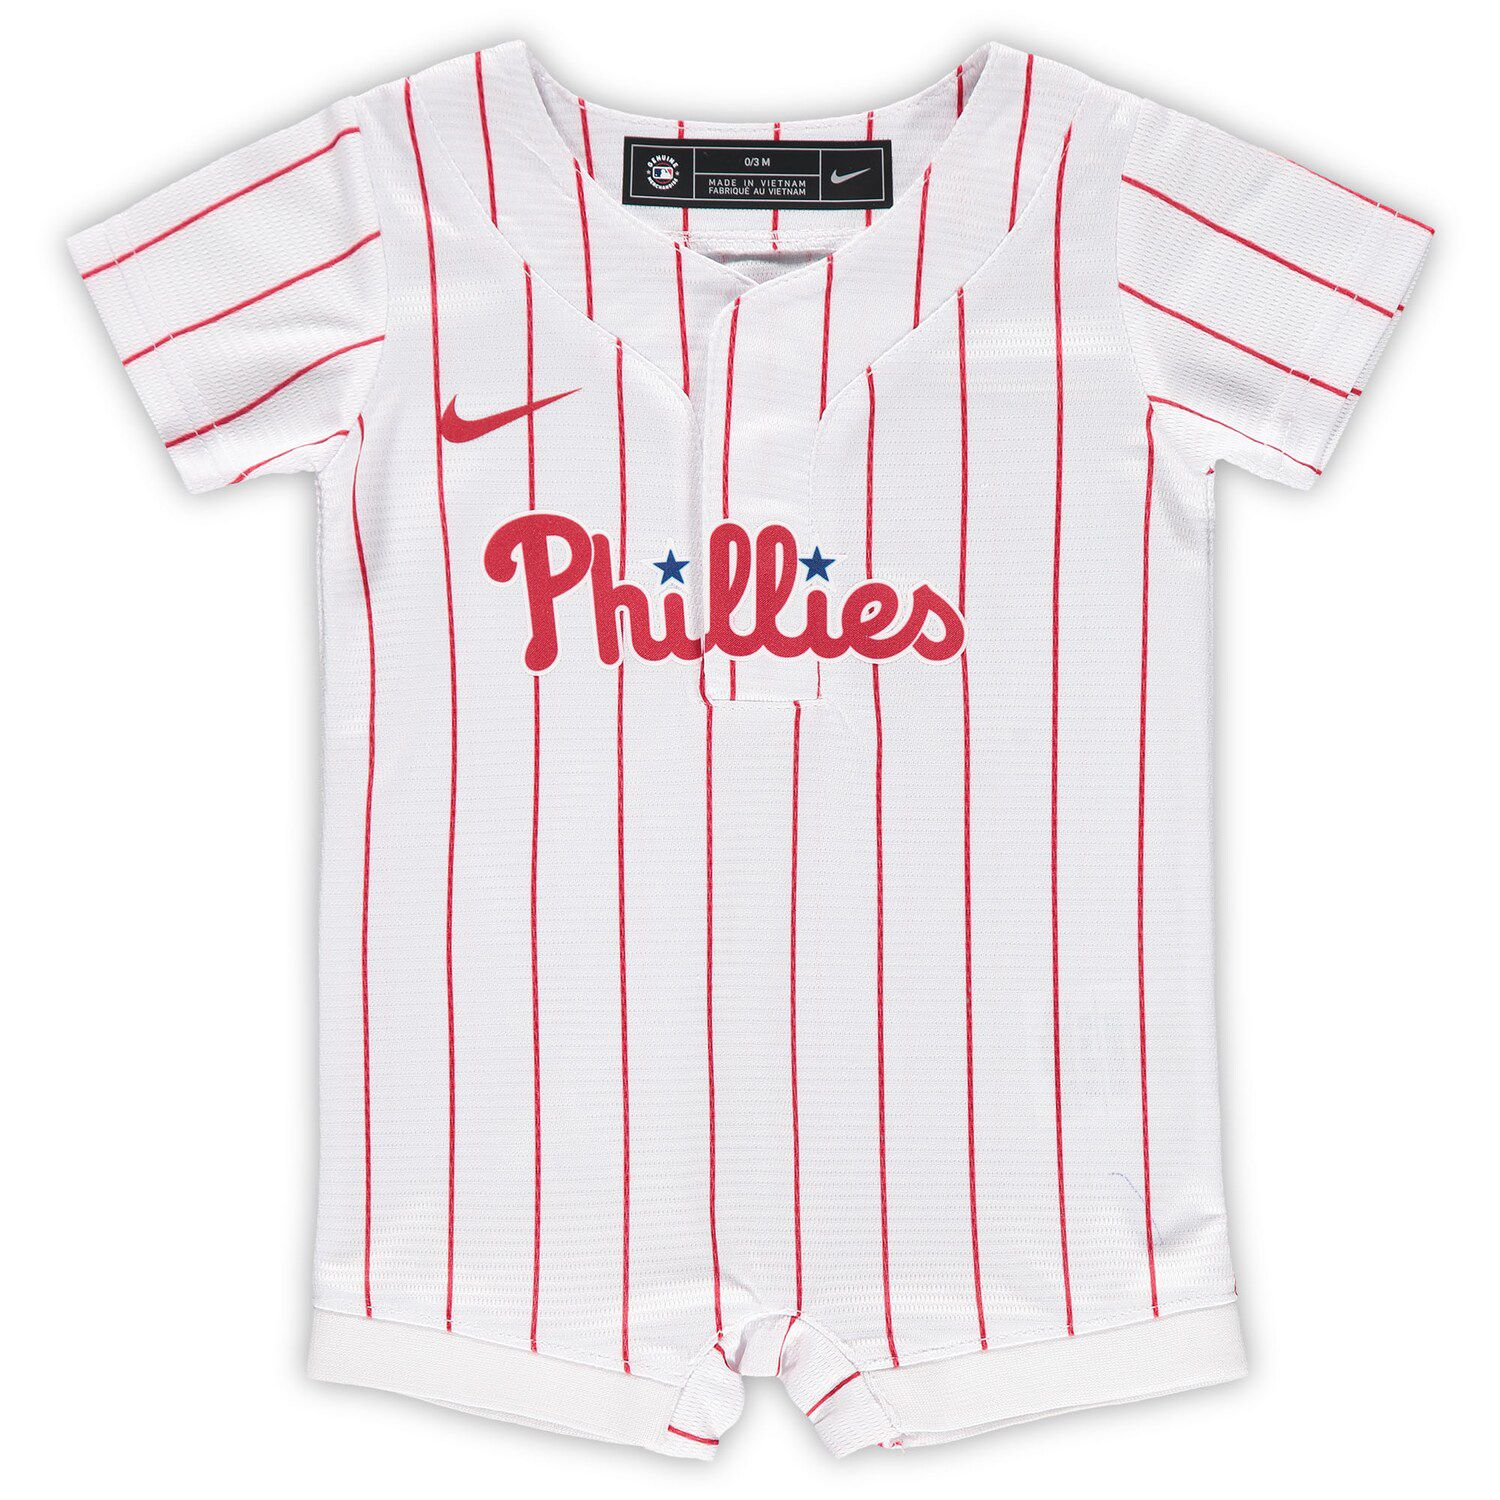 Philadelphia Phillies official jersey